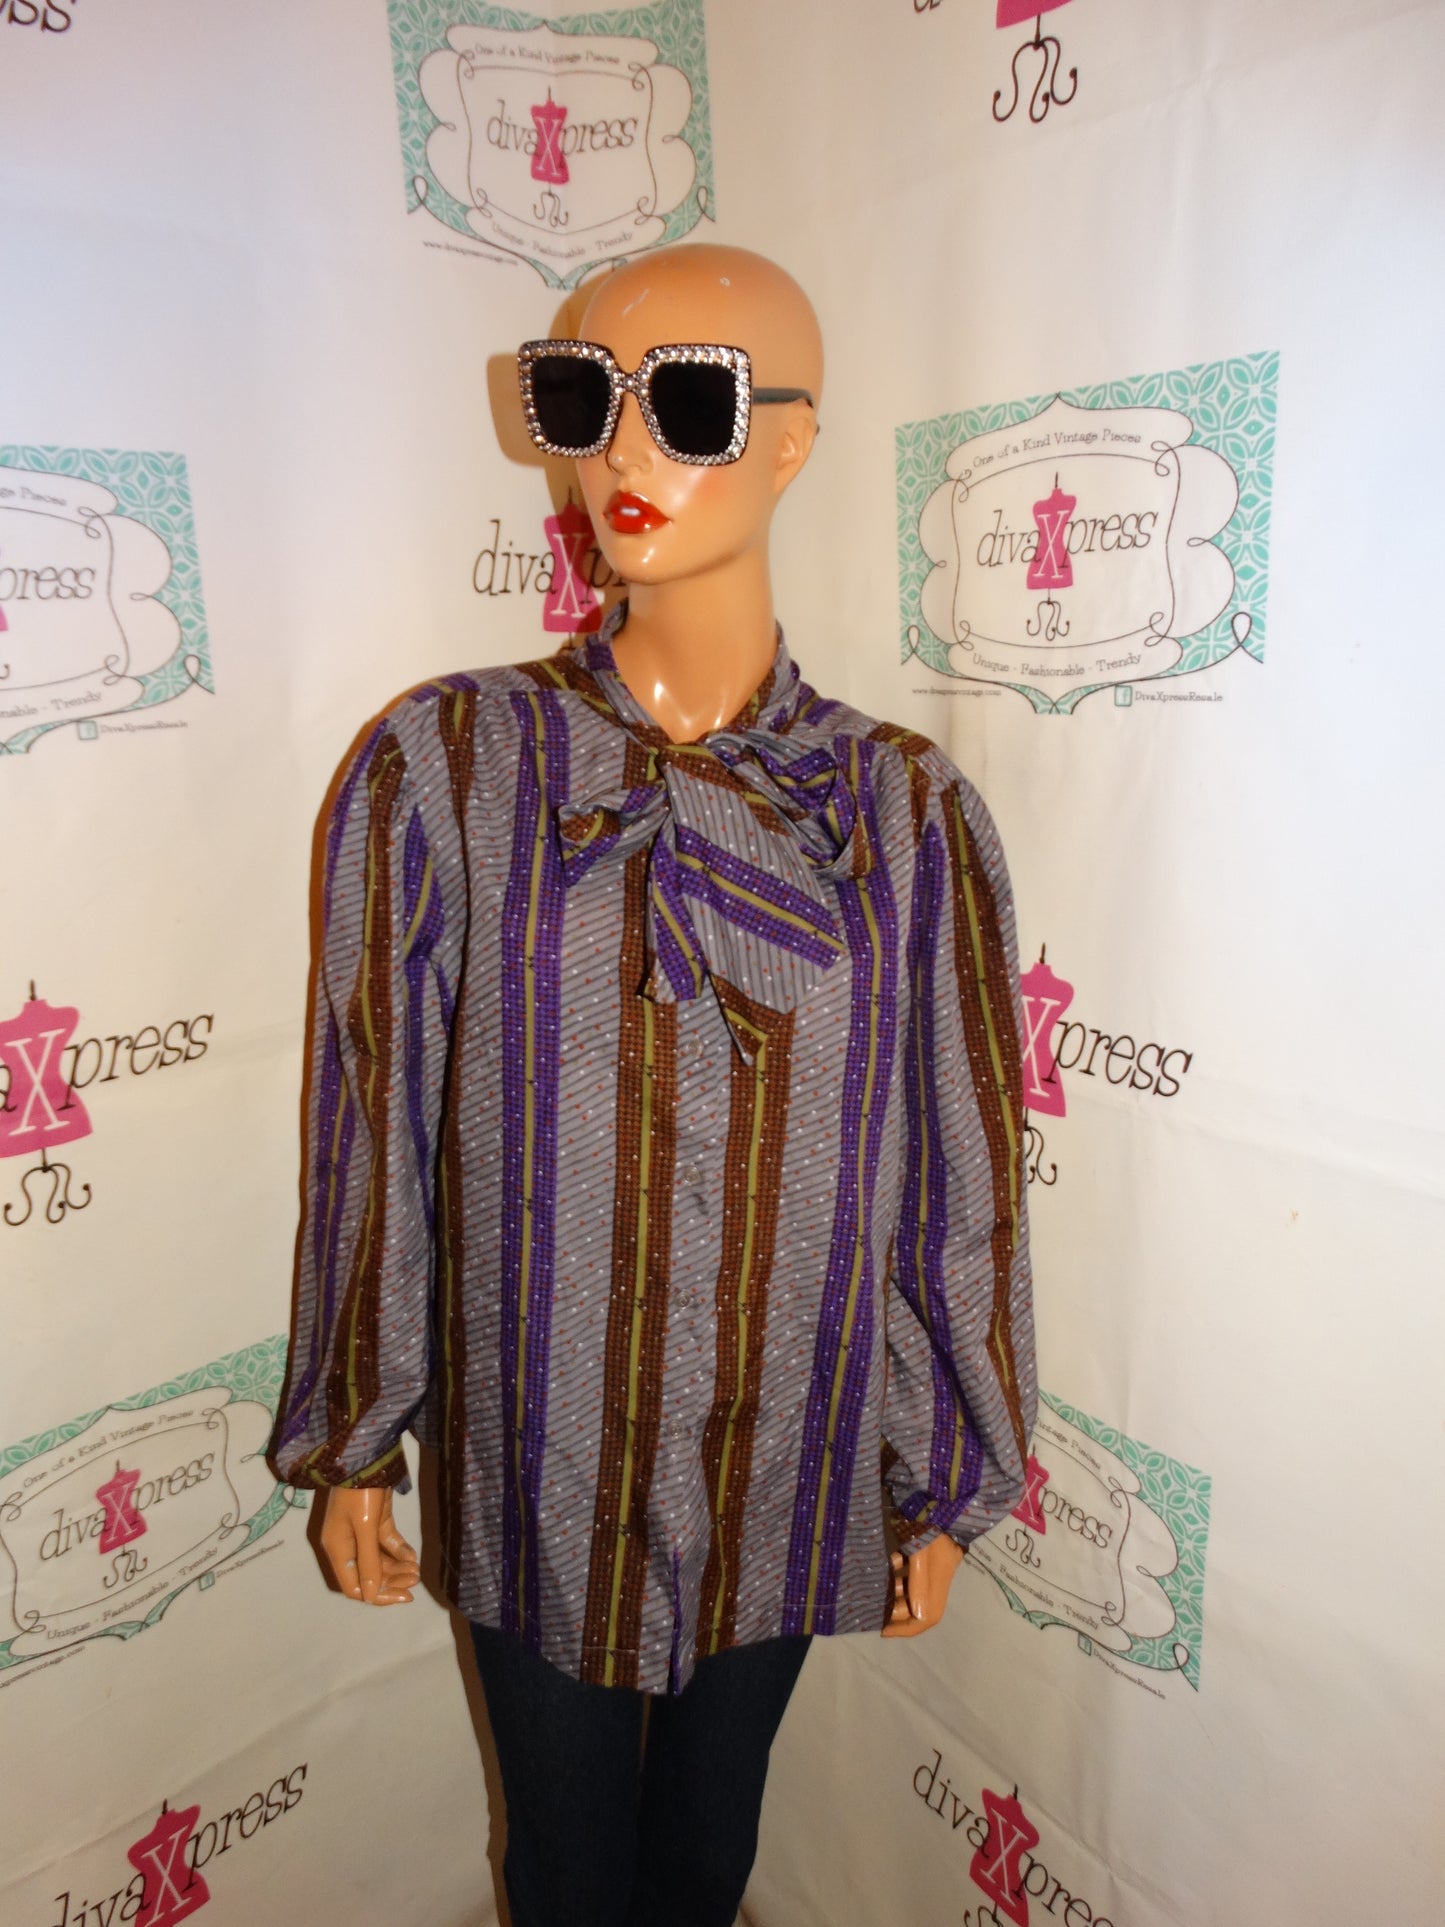 Vintage Rhonda Lee Gray/Purple Tie Bow Blouse Size 1x